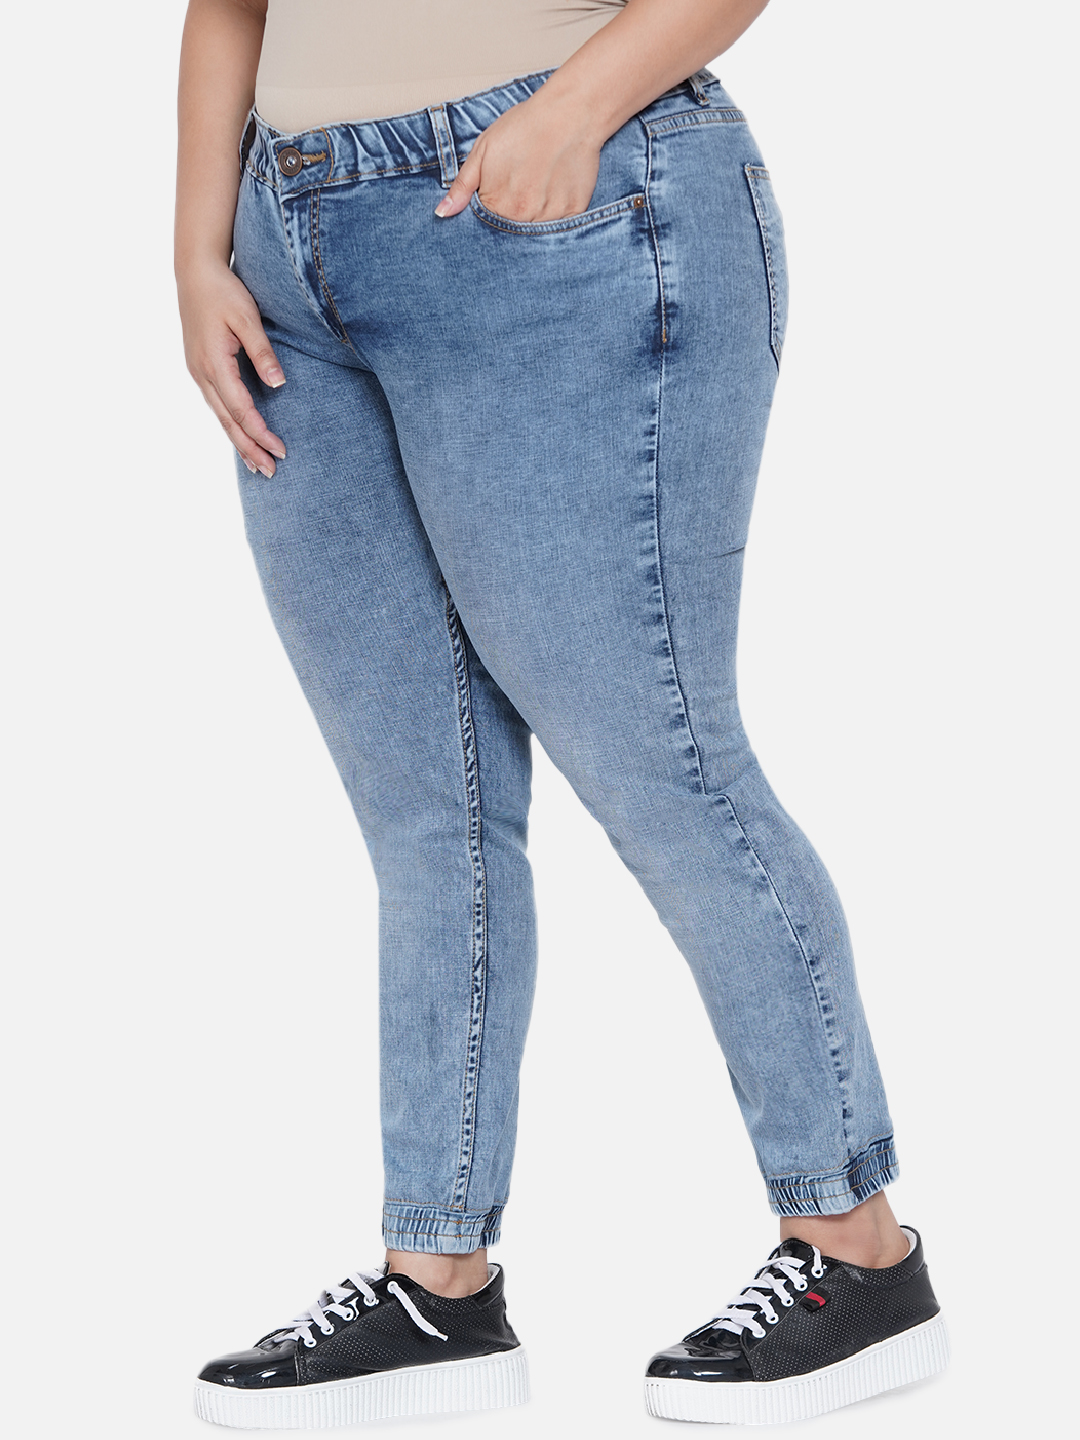 bottomwear_kiaahvi/jeans/KIAJ30/kiaj30-3.jpg